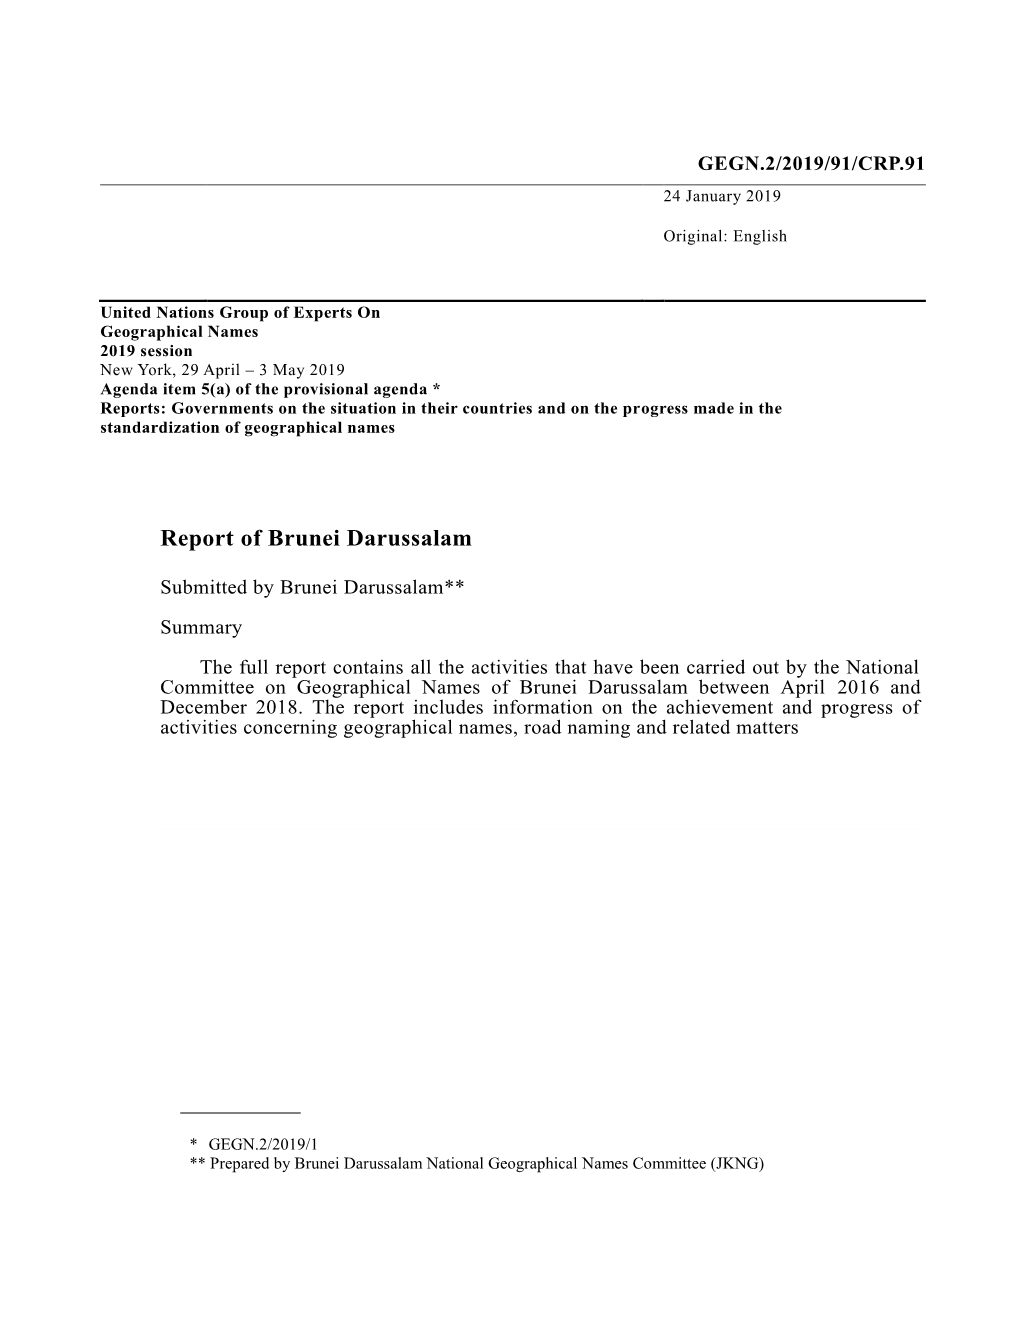 Report of Brunei Darussalam